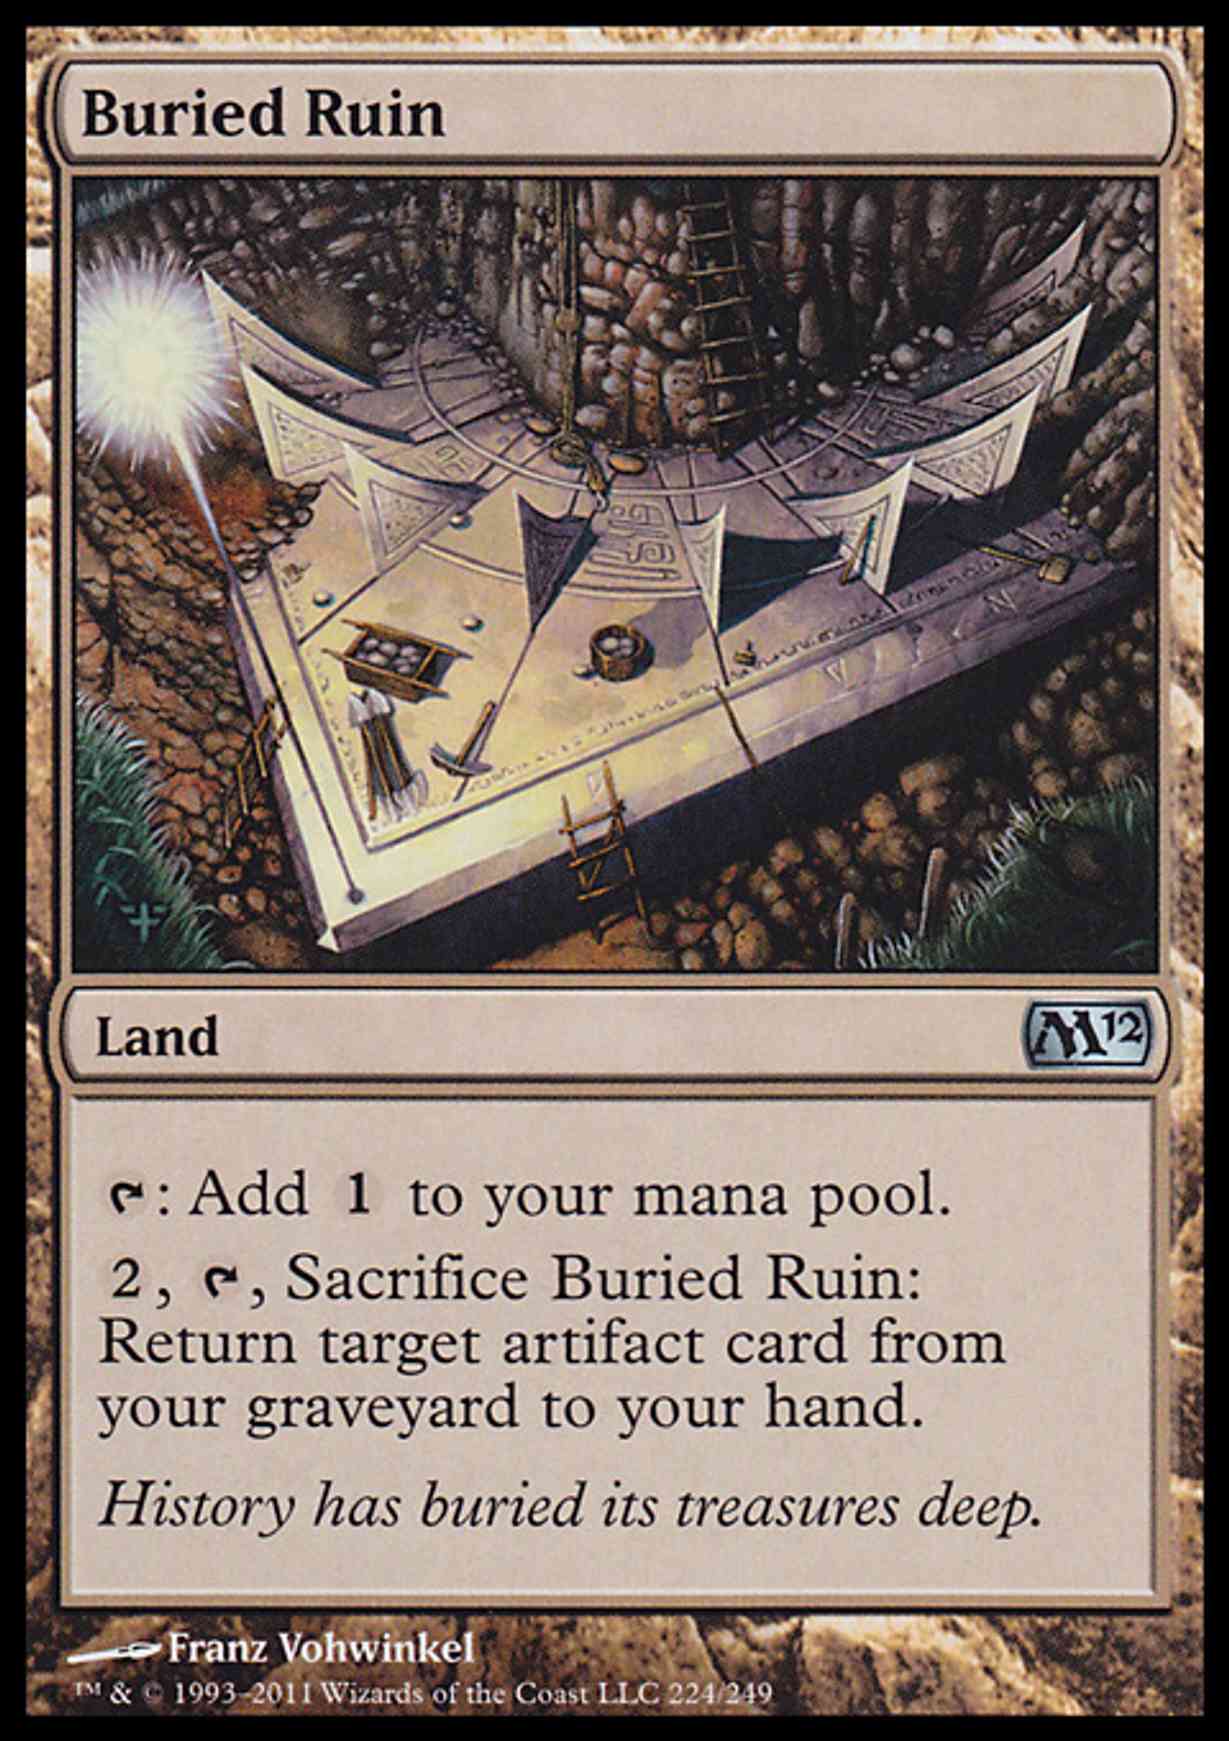 Buried Ruin magic card front